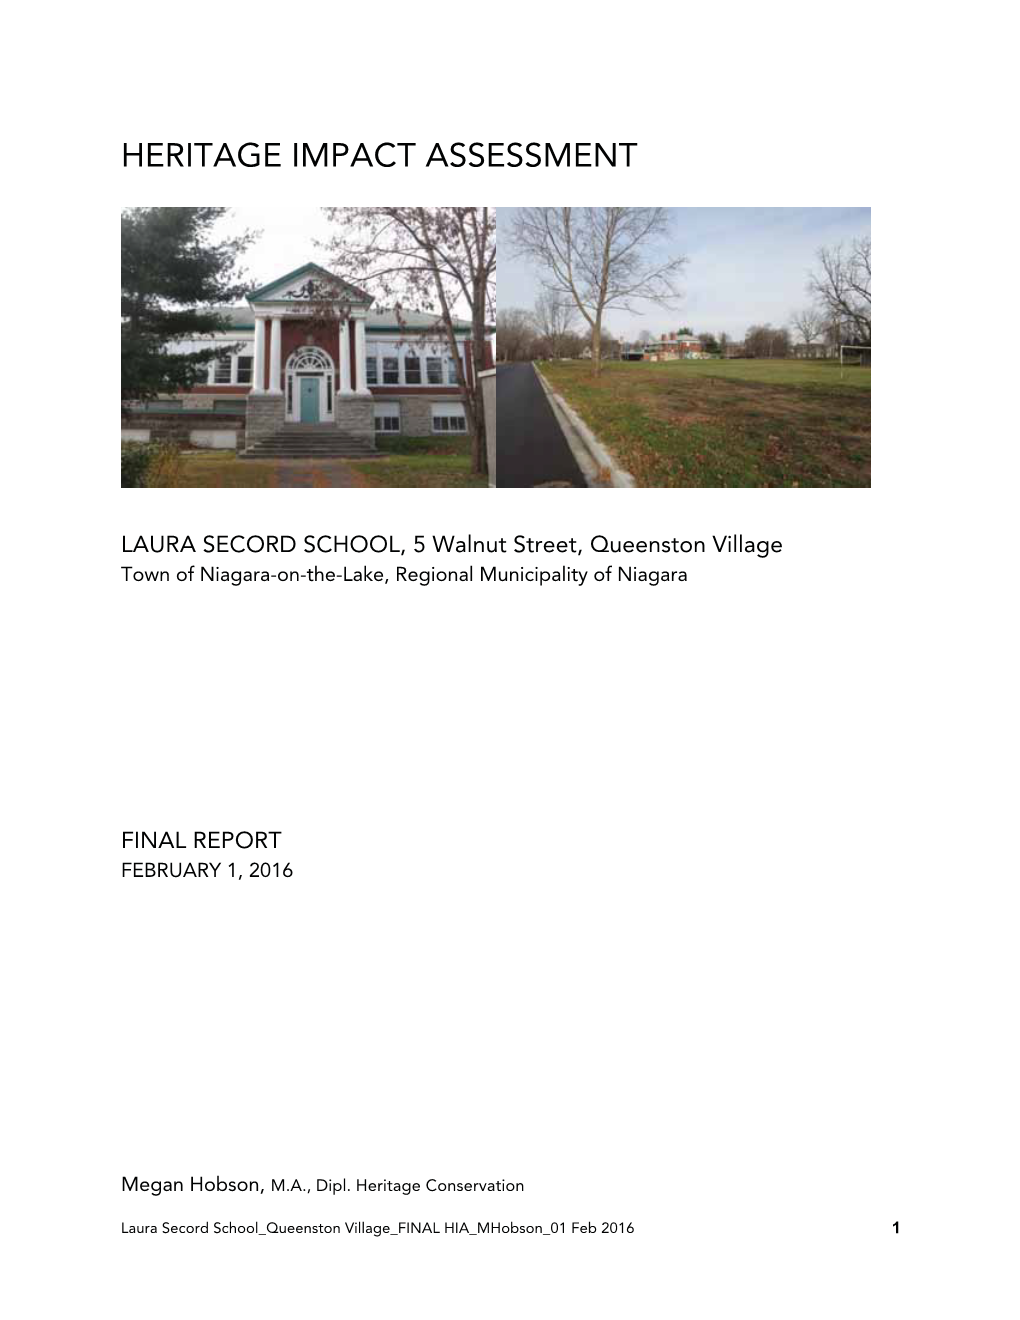 3. Heritage Impact Assessment